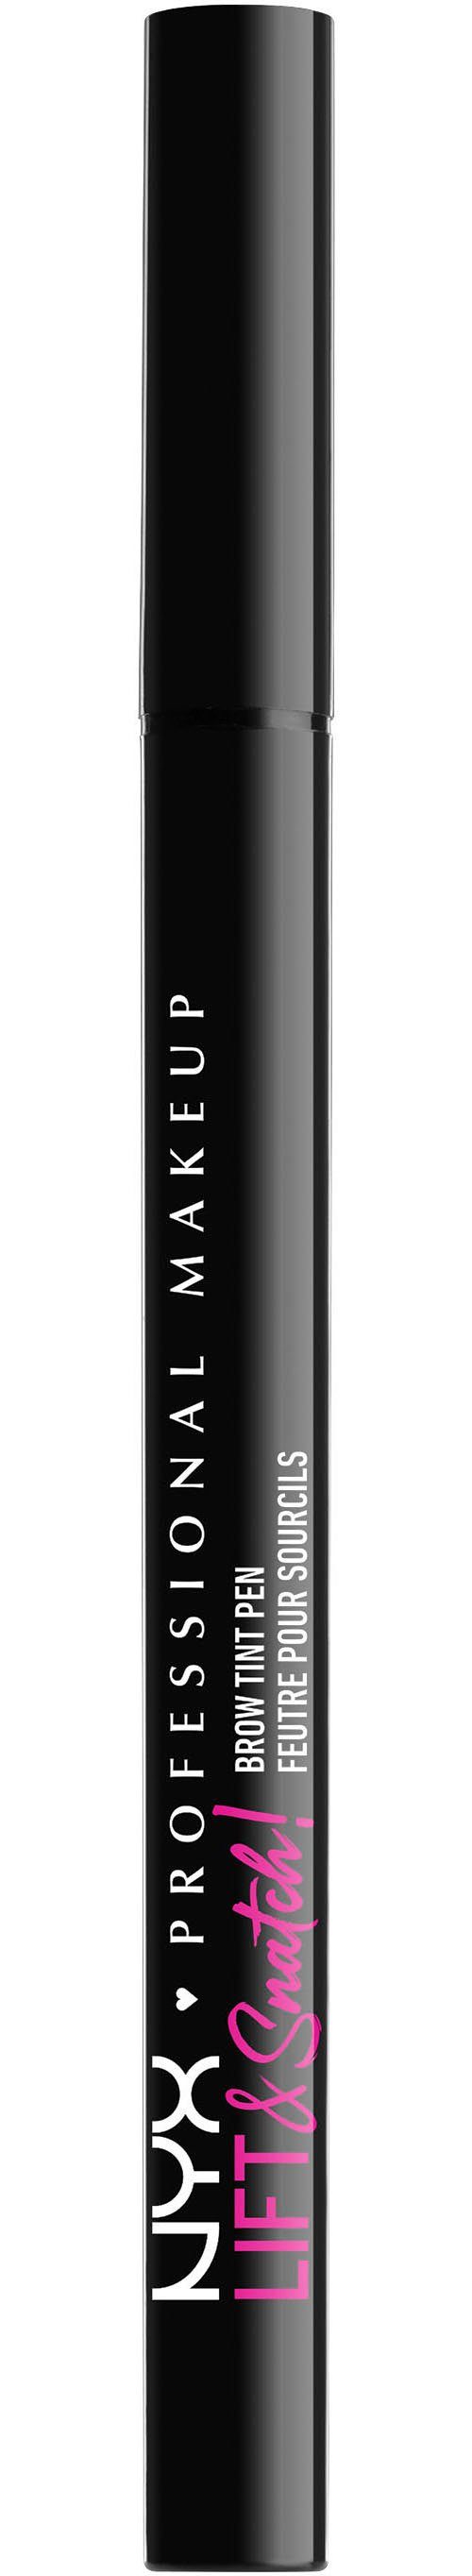 Tint NYX ash Pen brown Makeup Augenbrauen-Stift Professional & Snatch Brow Lift